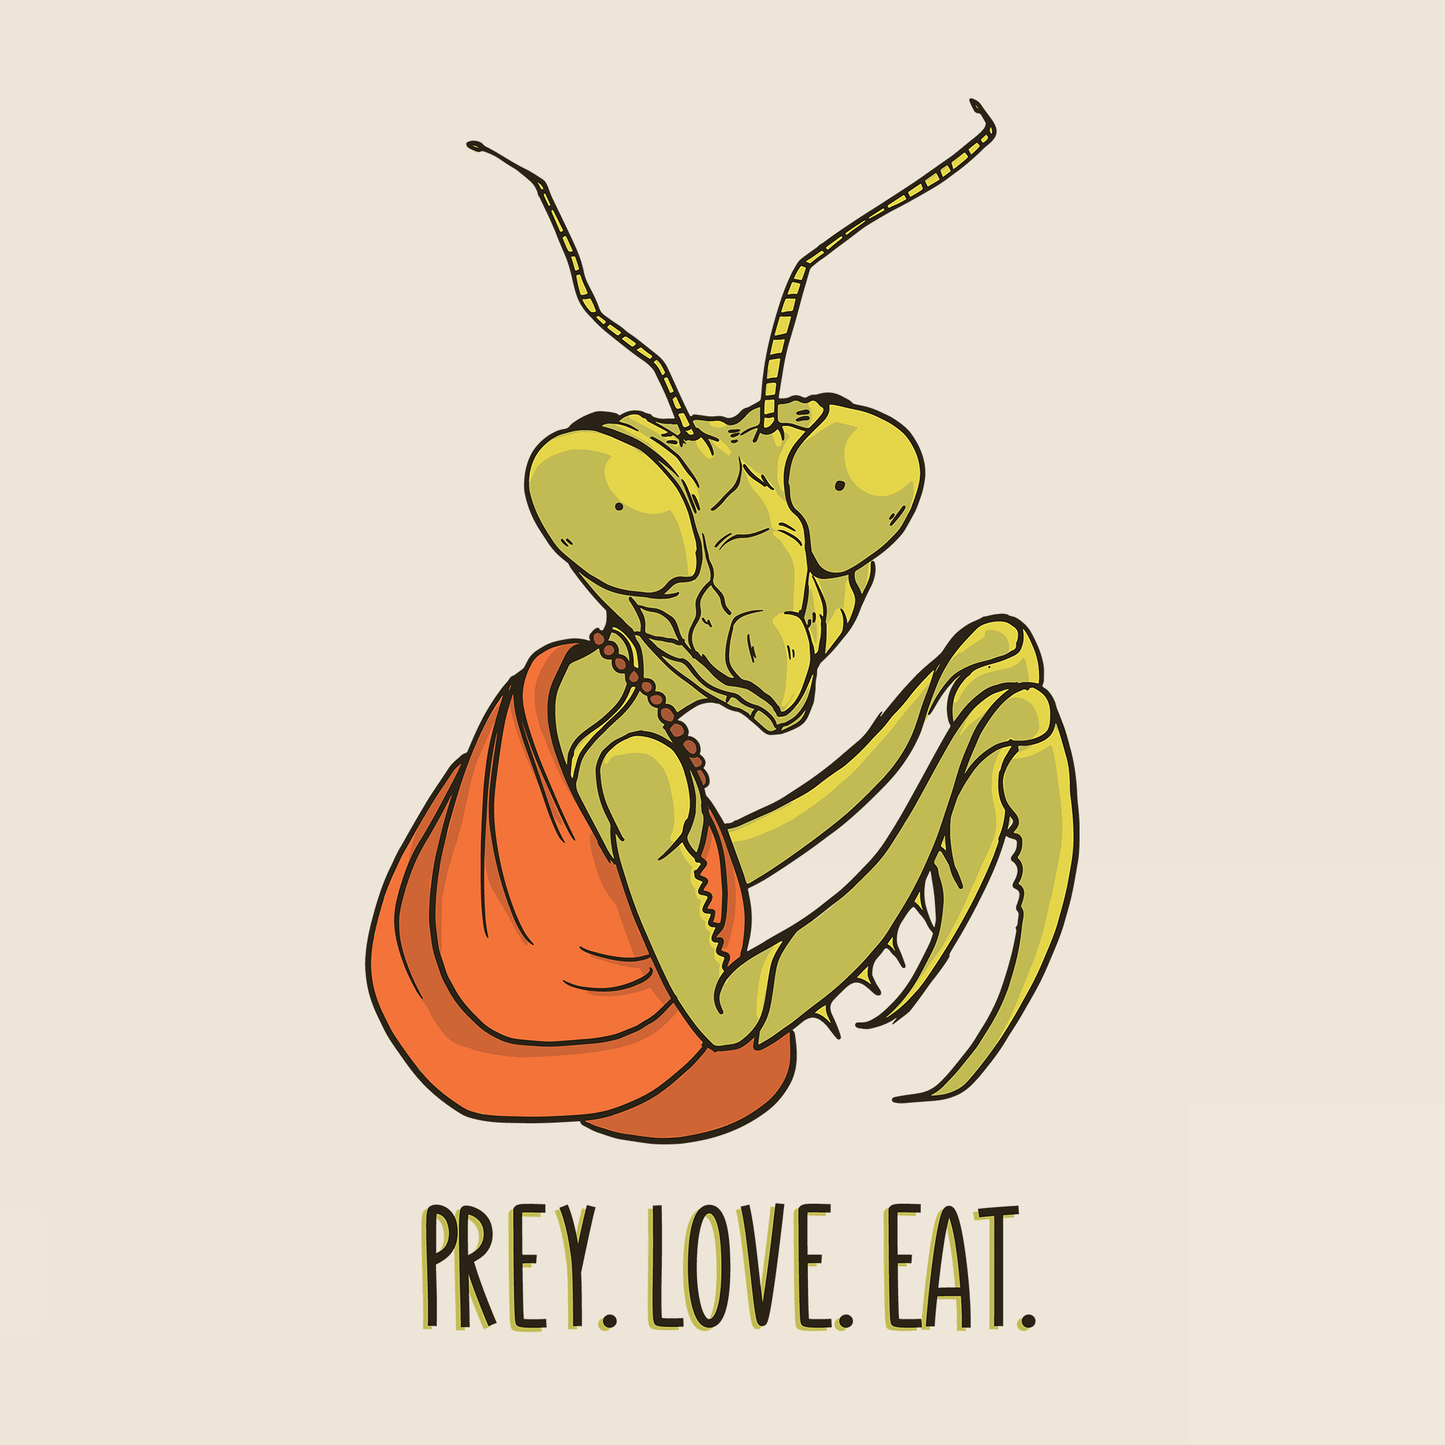 Prey. Love. Eat. T-Shirt